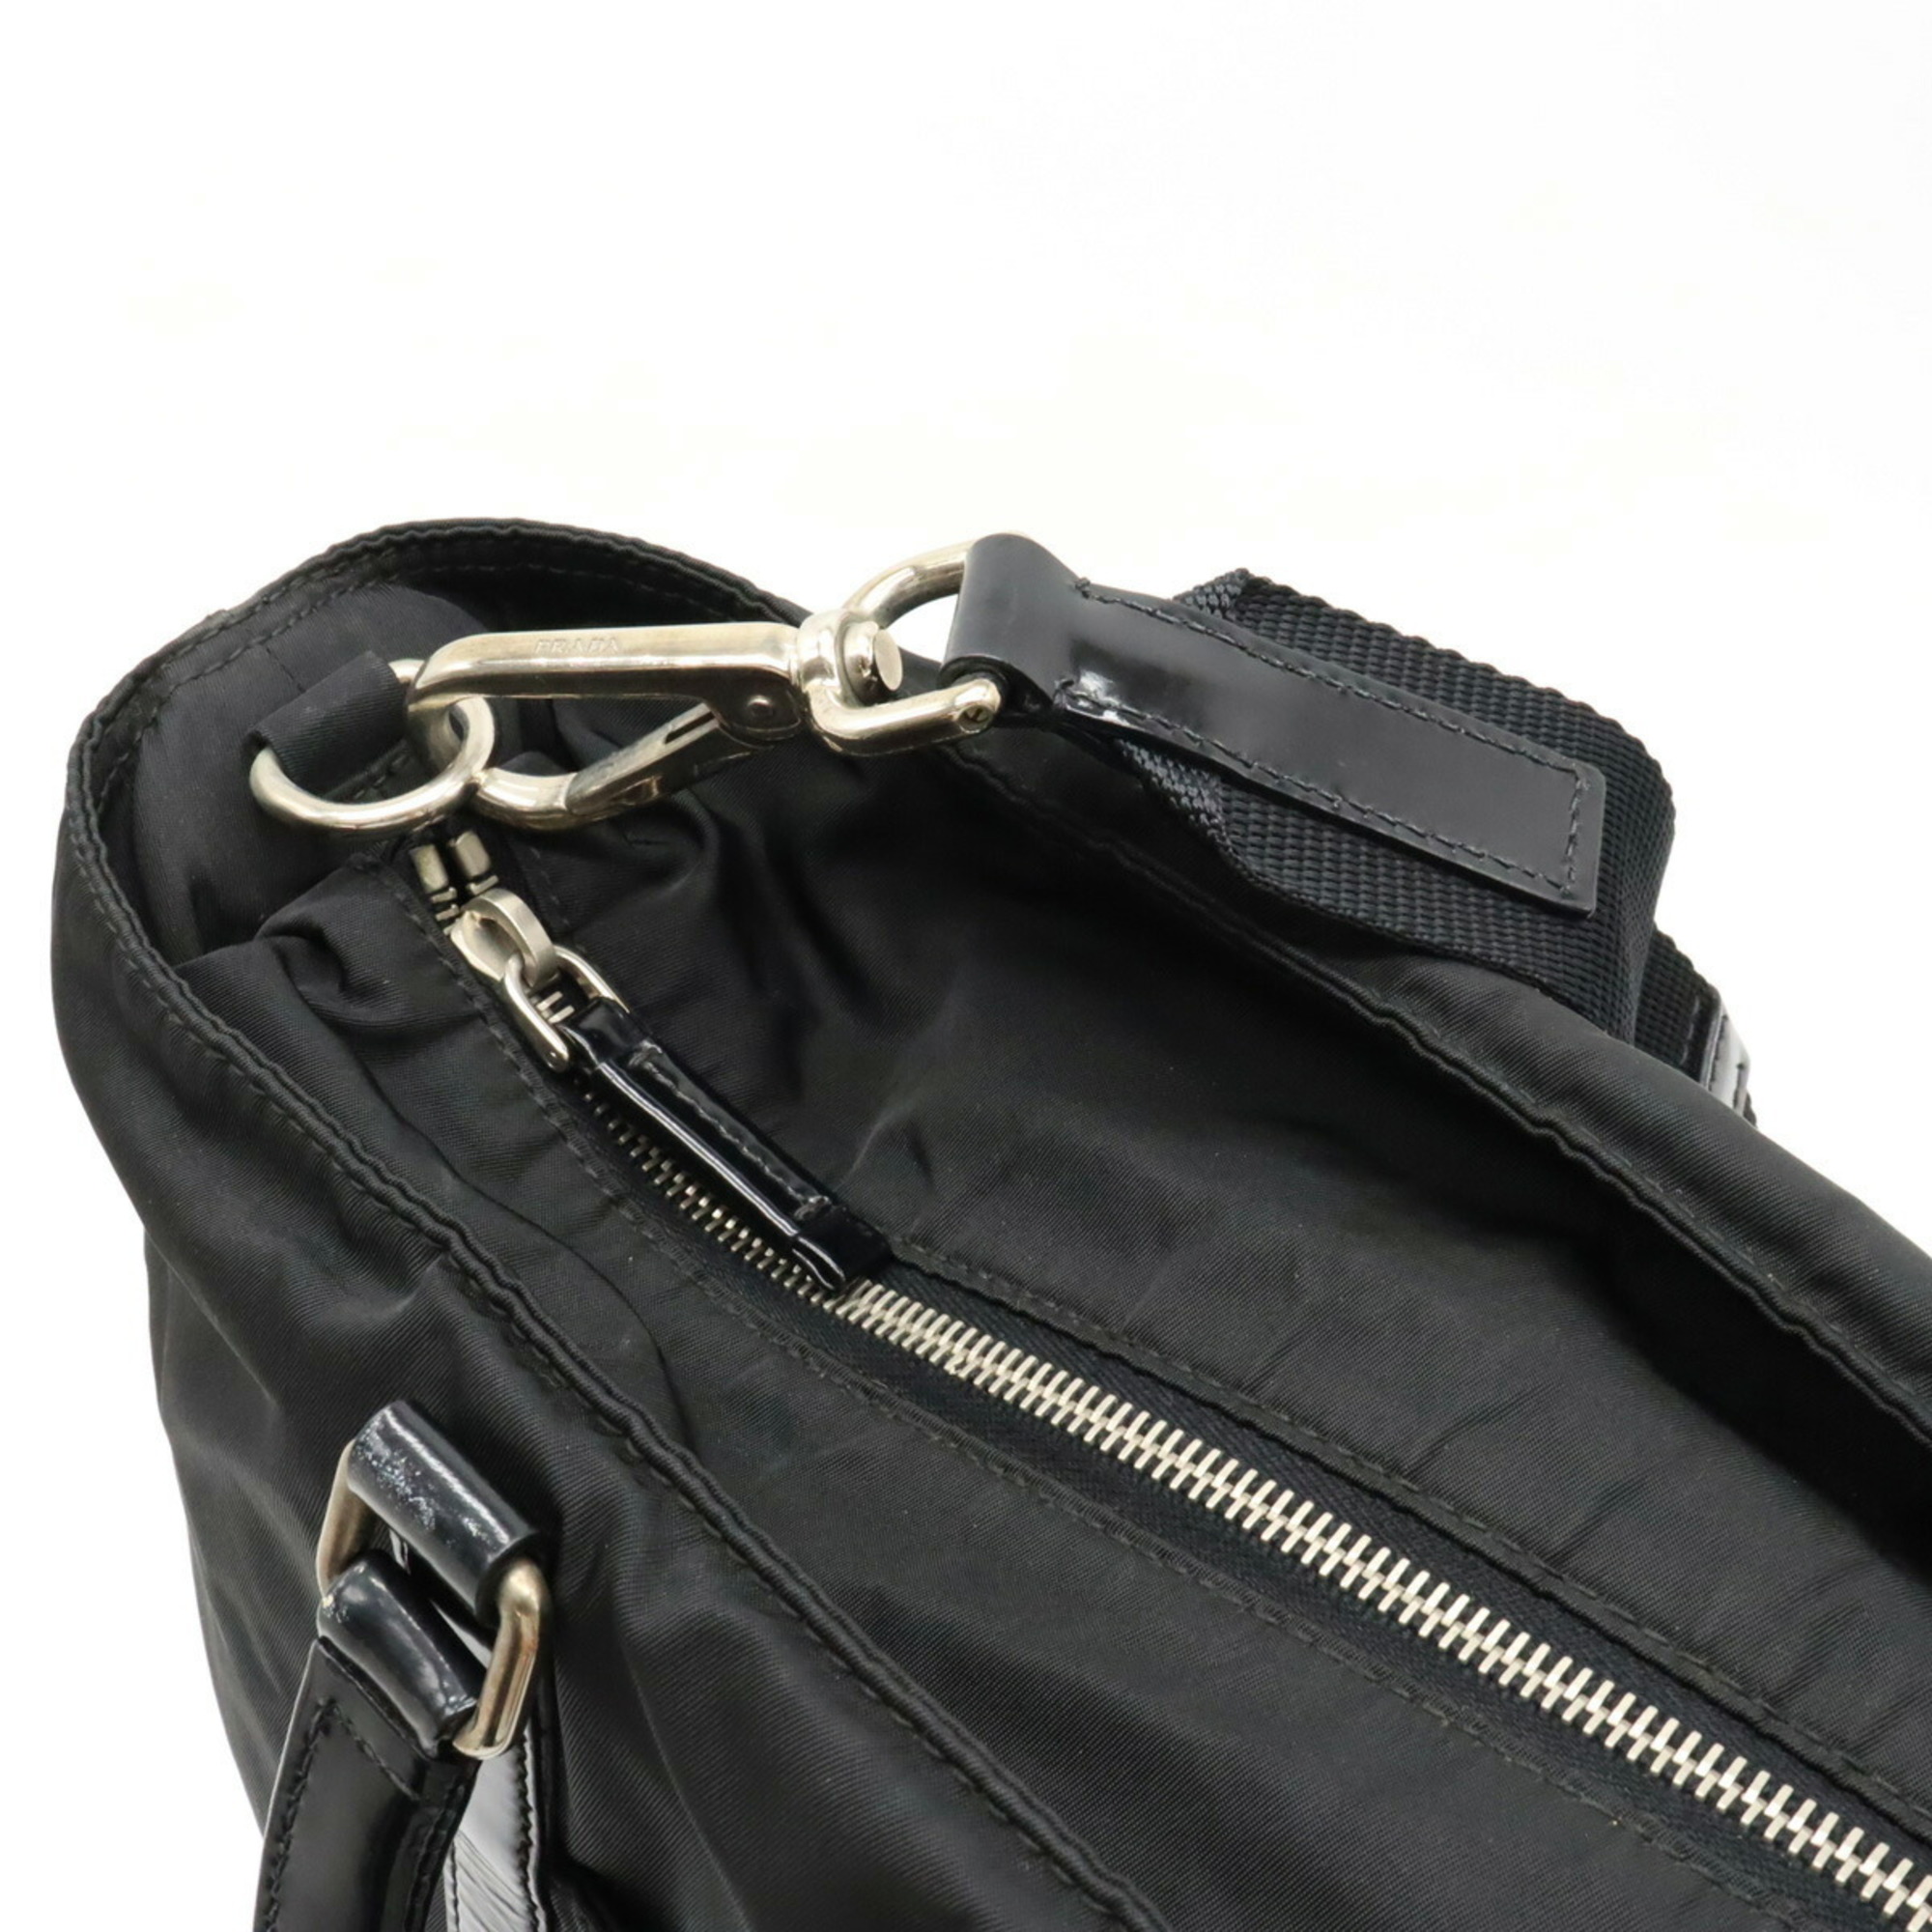 PRADA Prada Tote Bag Handbag Shoulder Nylon Patent Leather NERO Black BN1057